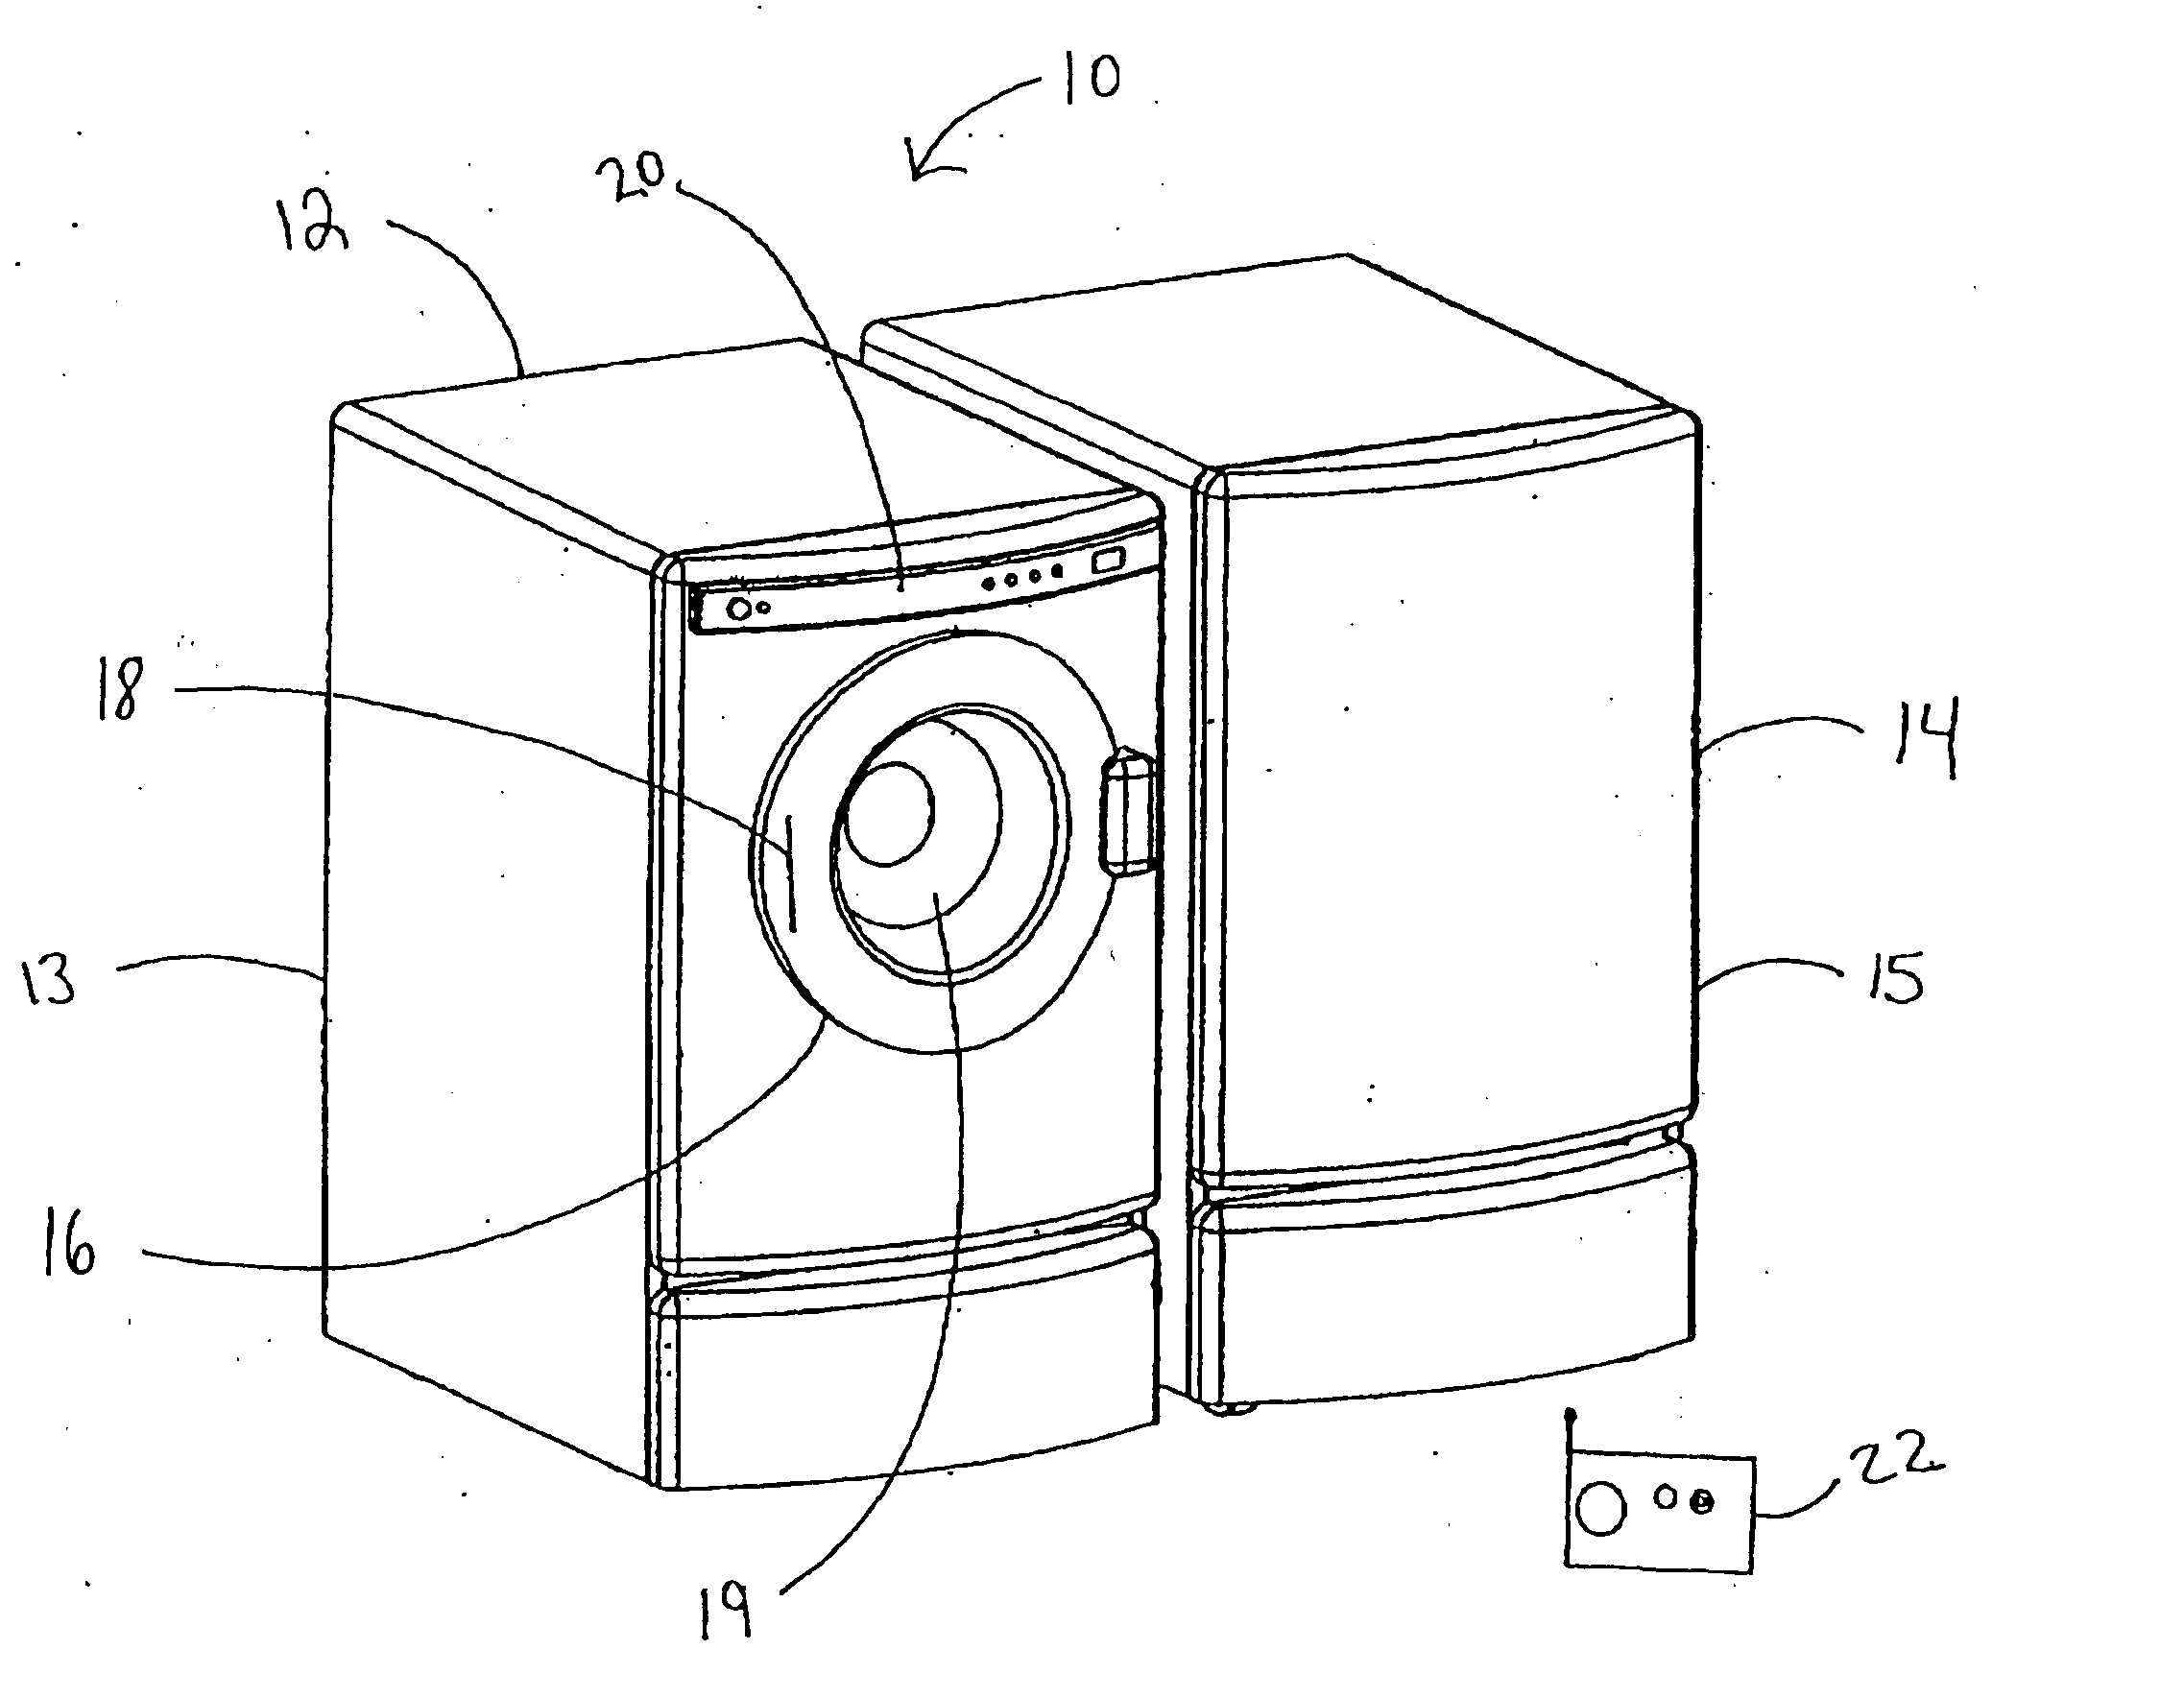 Non-aqueous washing machine with modular construction